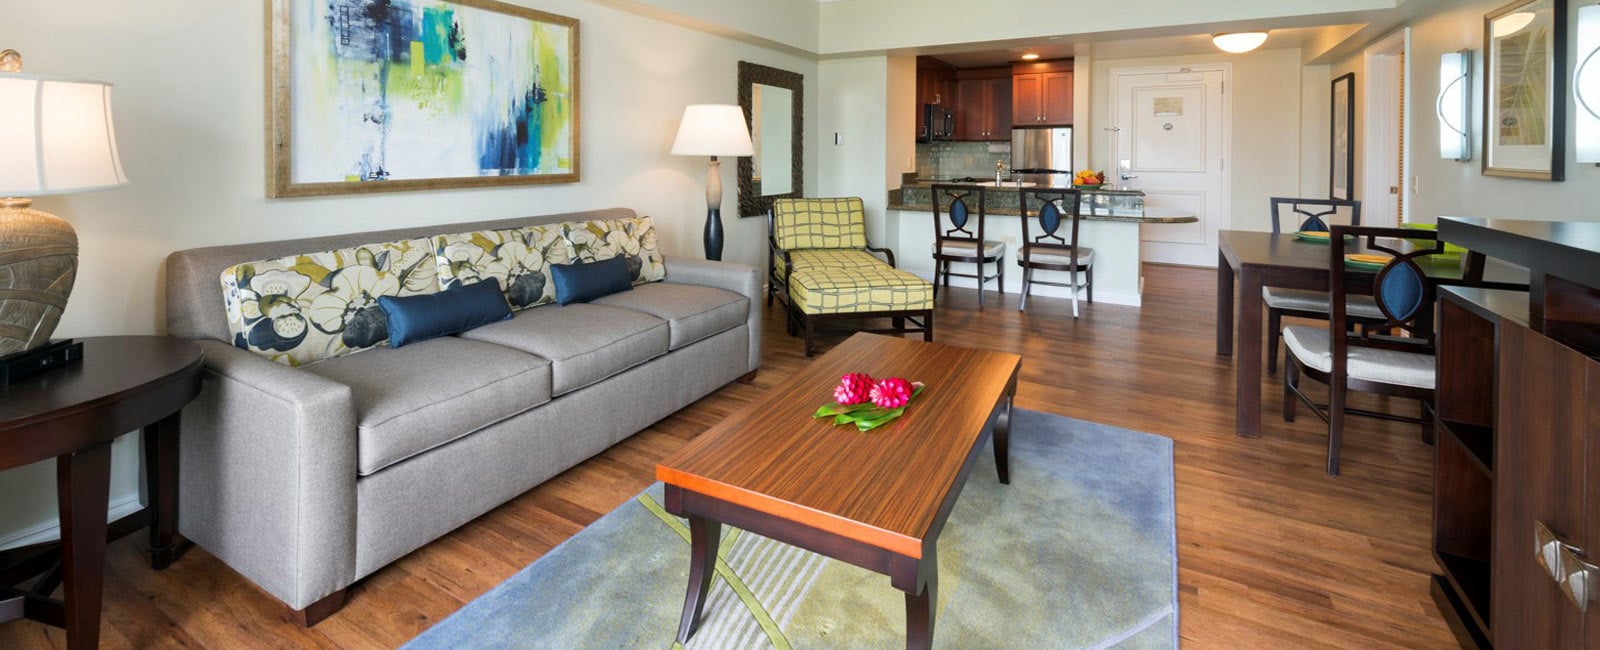 Living Area at the Kalia Suites in Honolulu, Hawaii